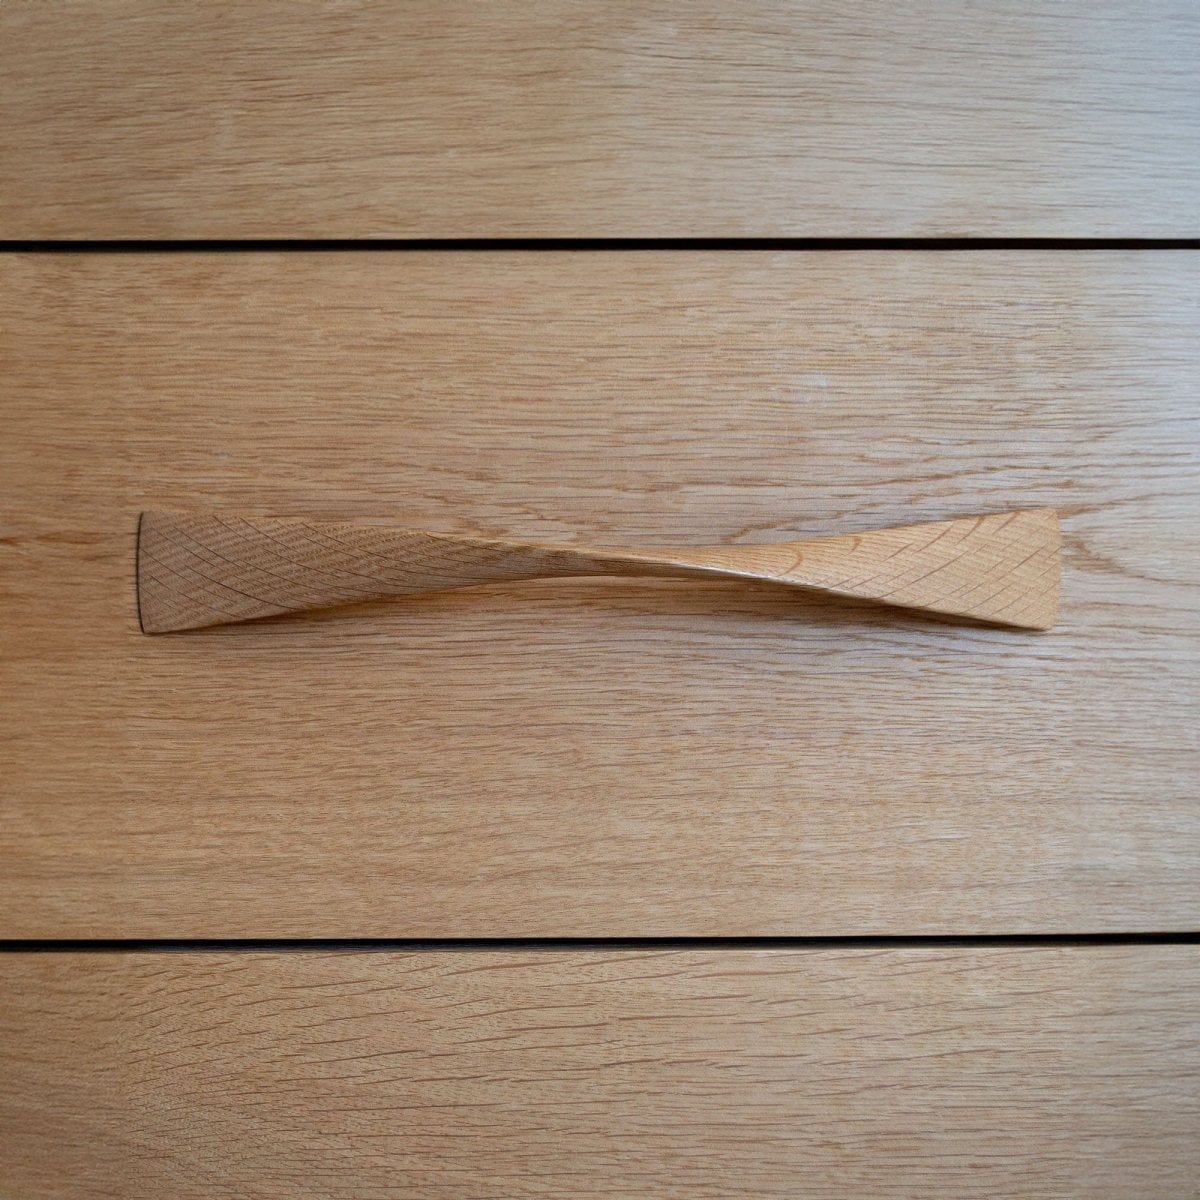 Twisted Oak Drawer Handles, Minimalist Oak Kitchen Handles, wooden twist handle